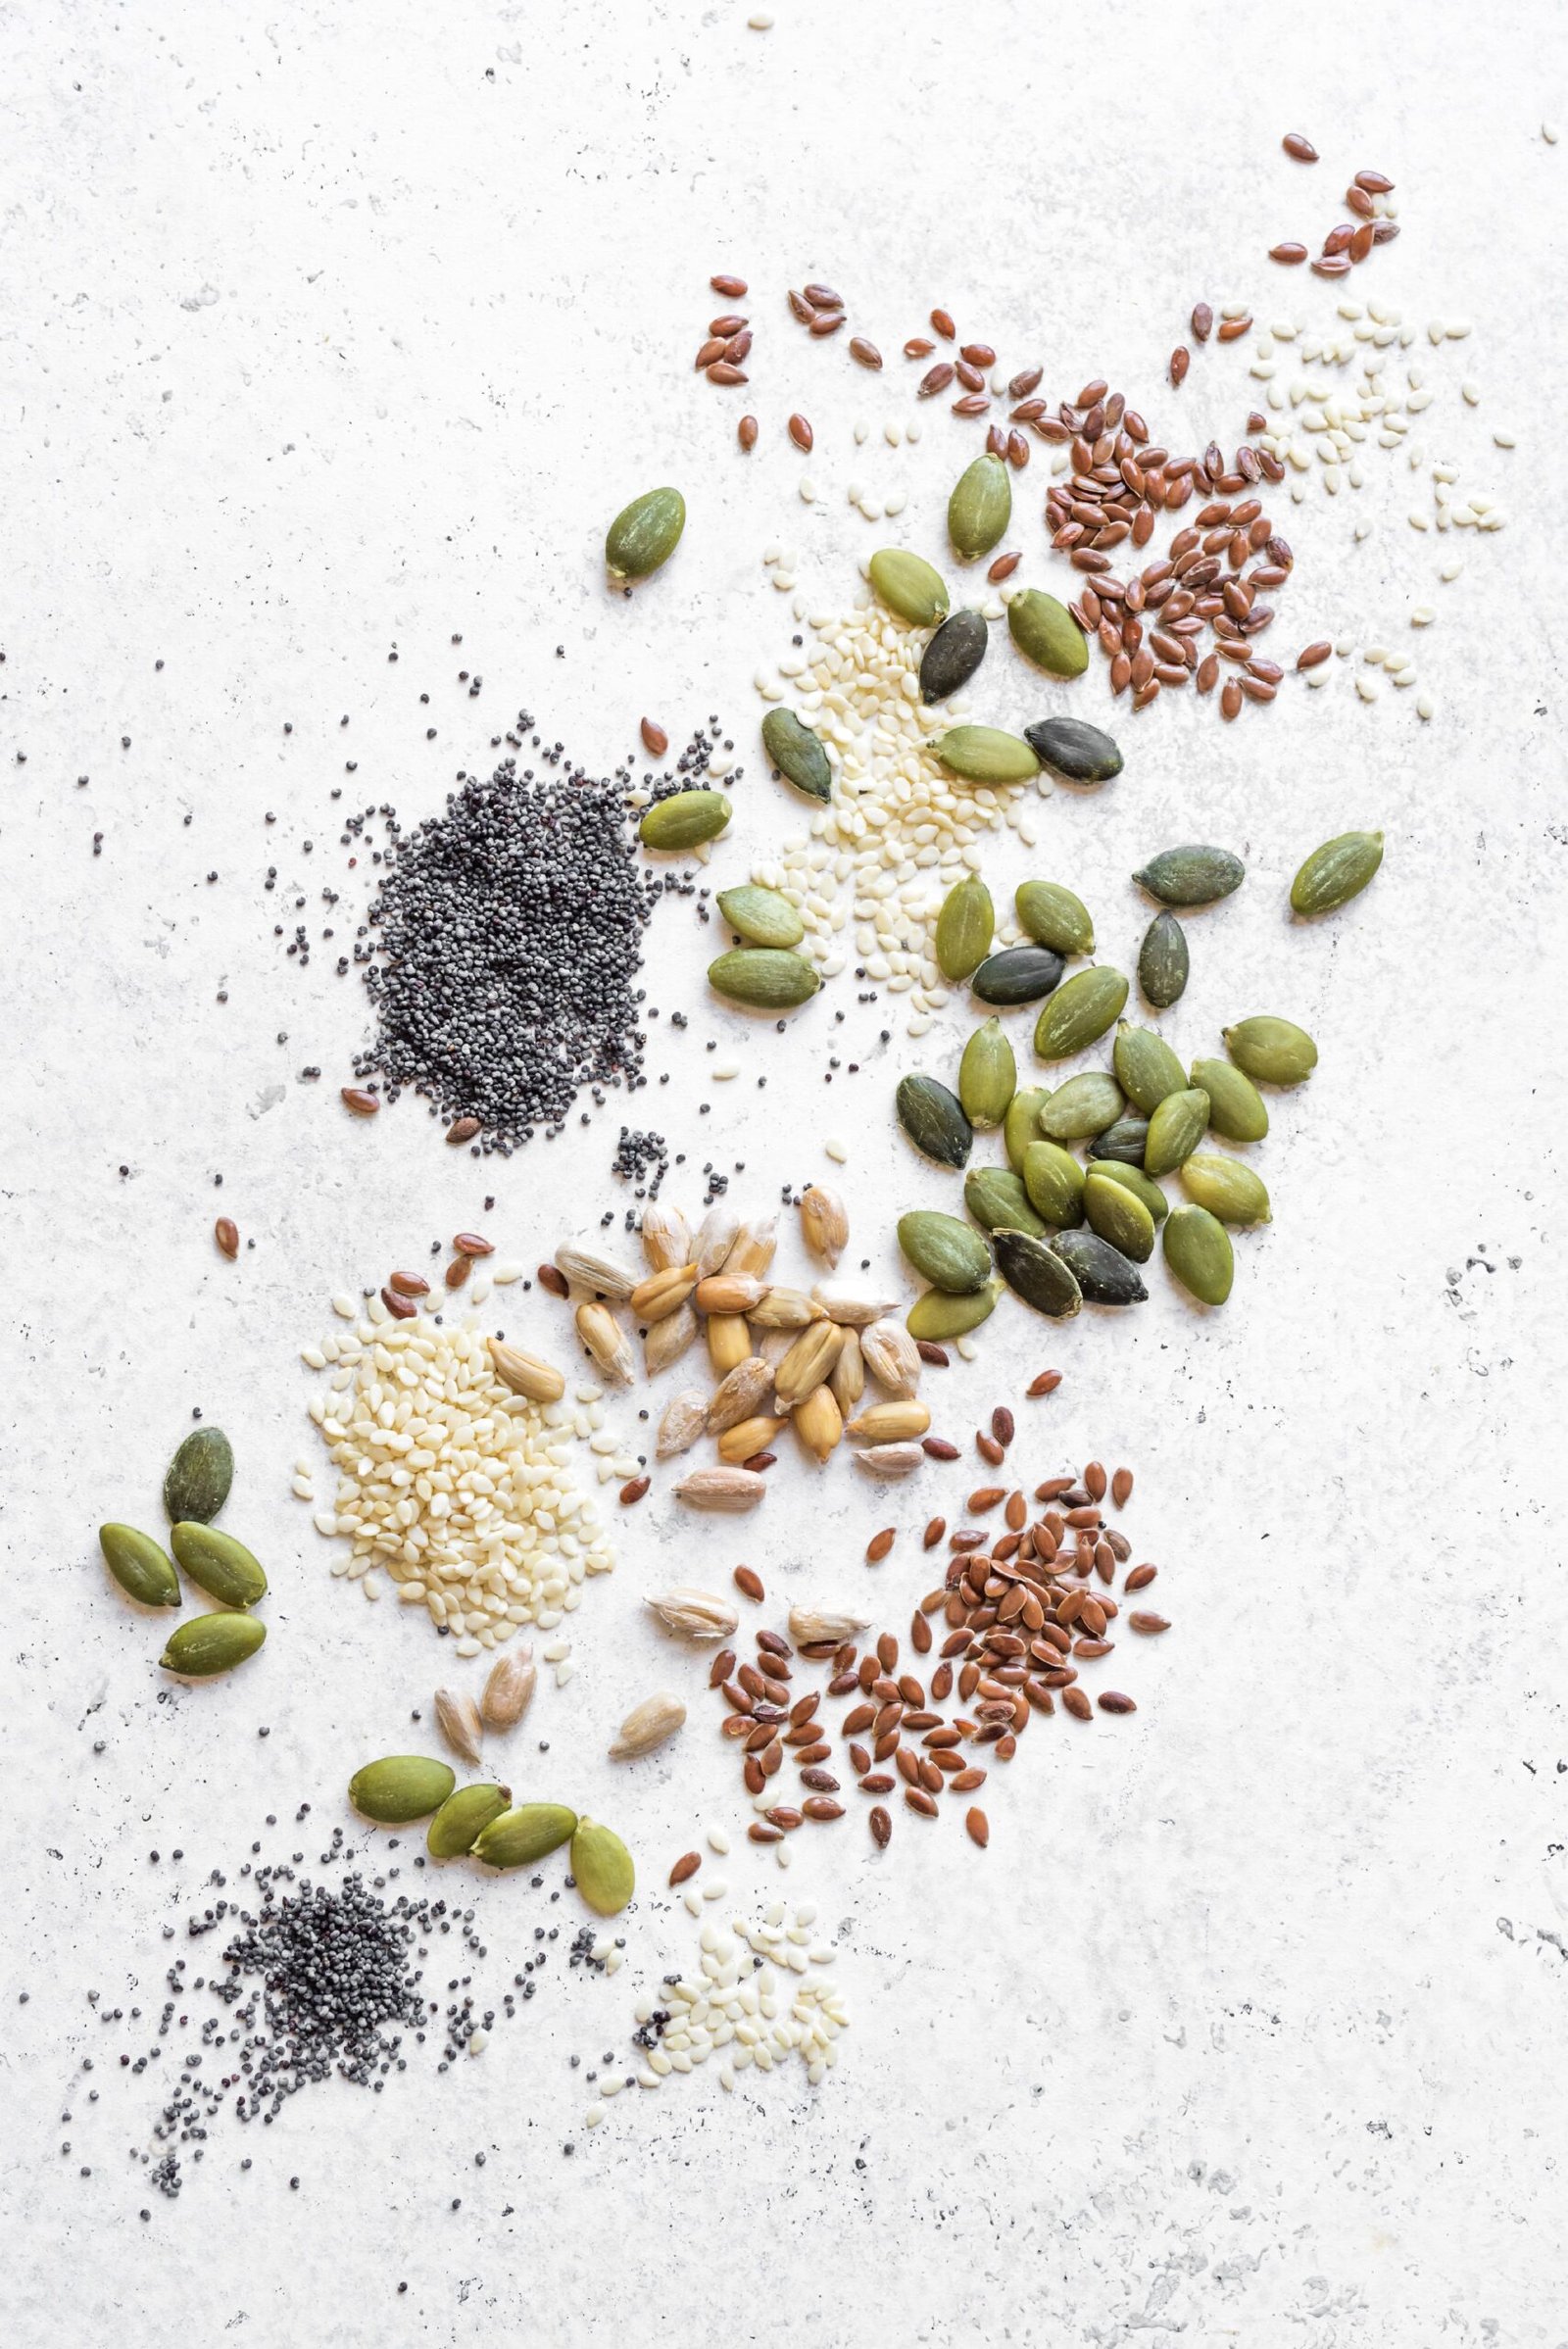 Variety of seeds on floor